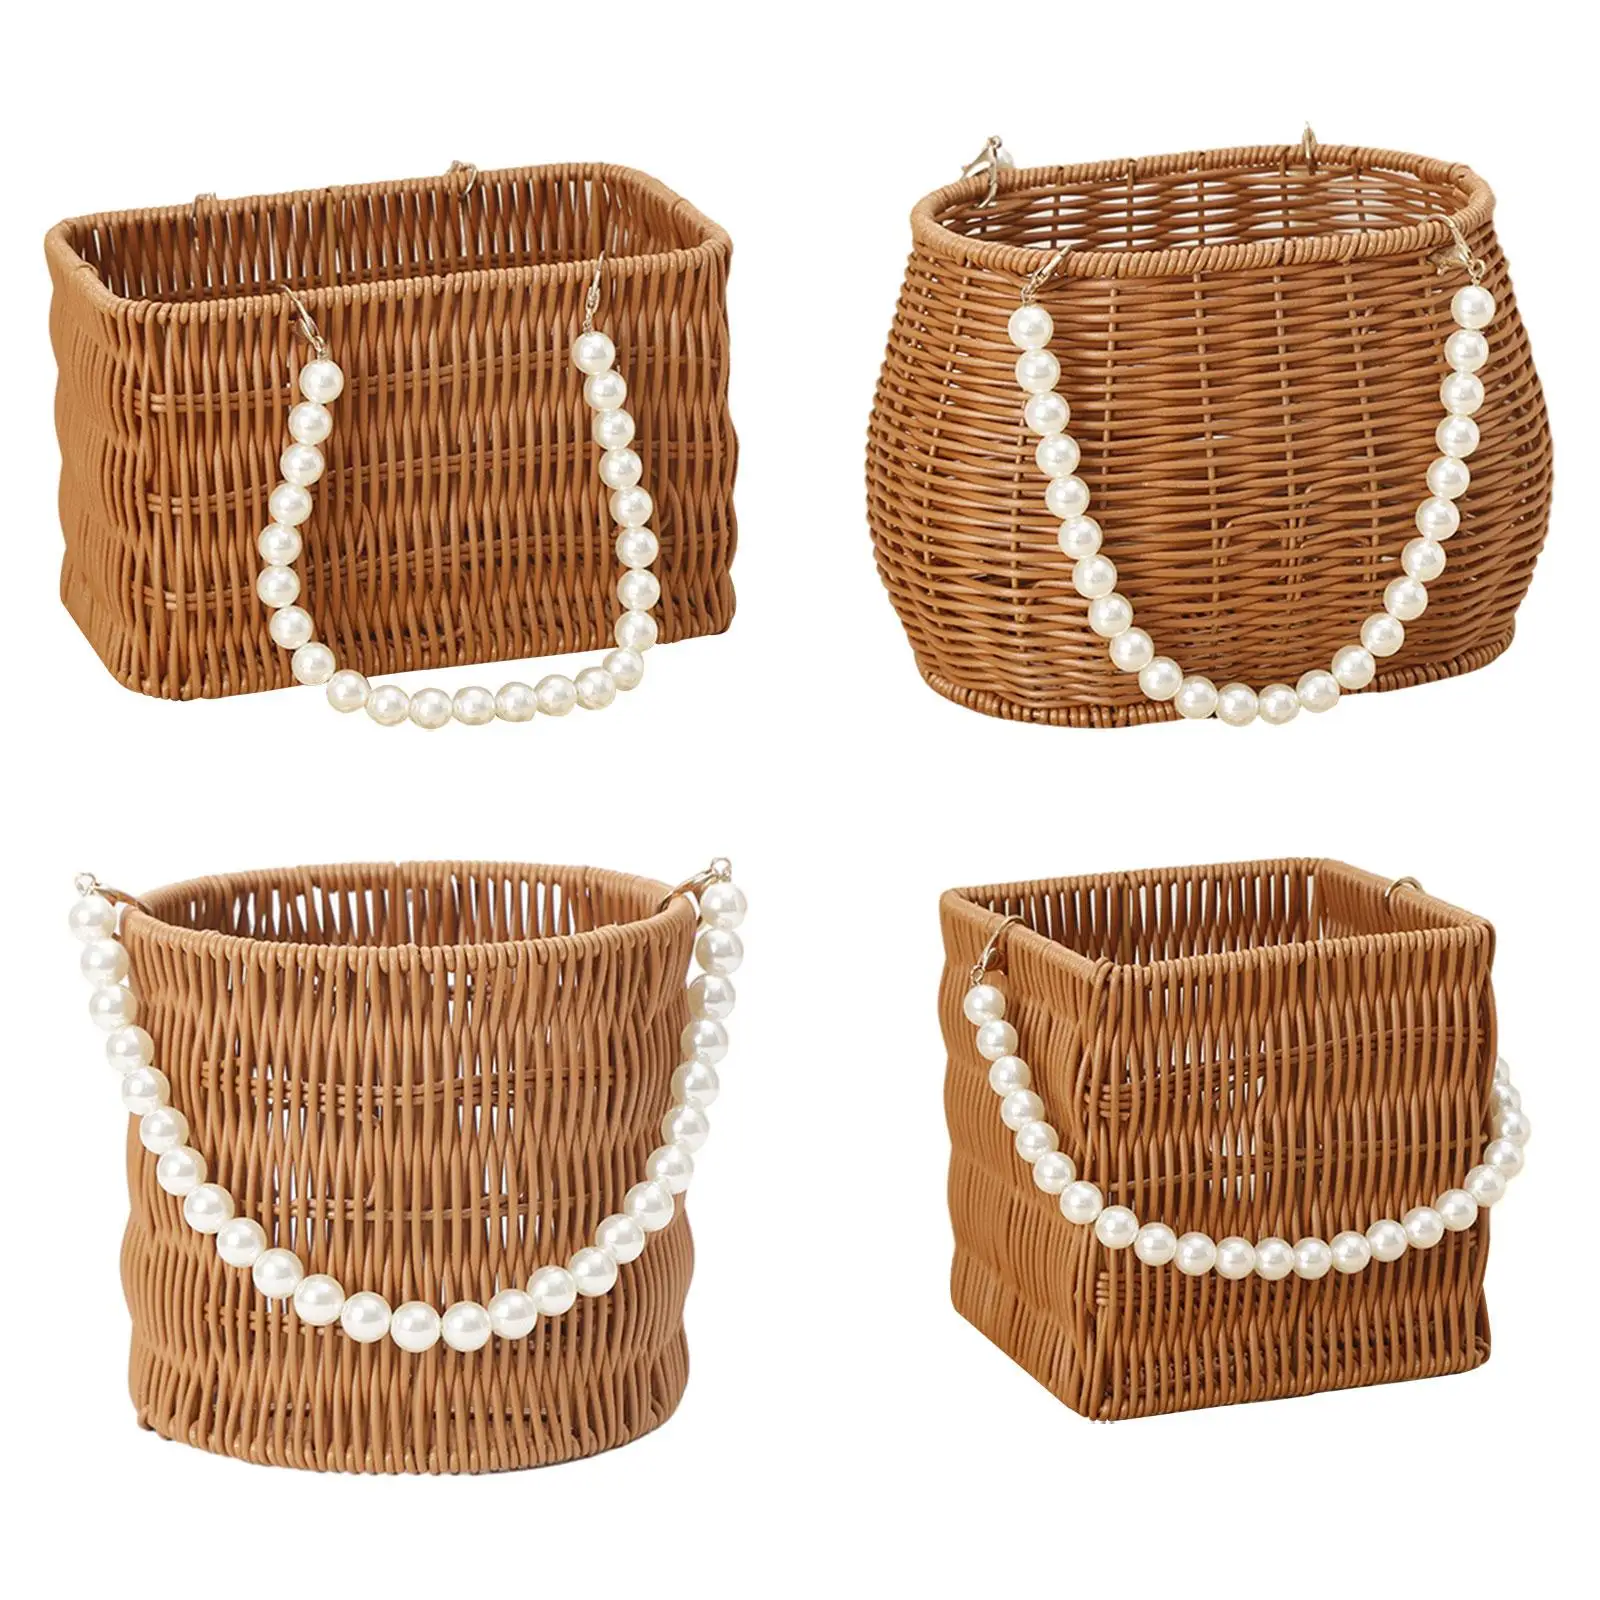 Imitation Rattan Basket Flower Basket Handwoven Basket for Small Daily Items